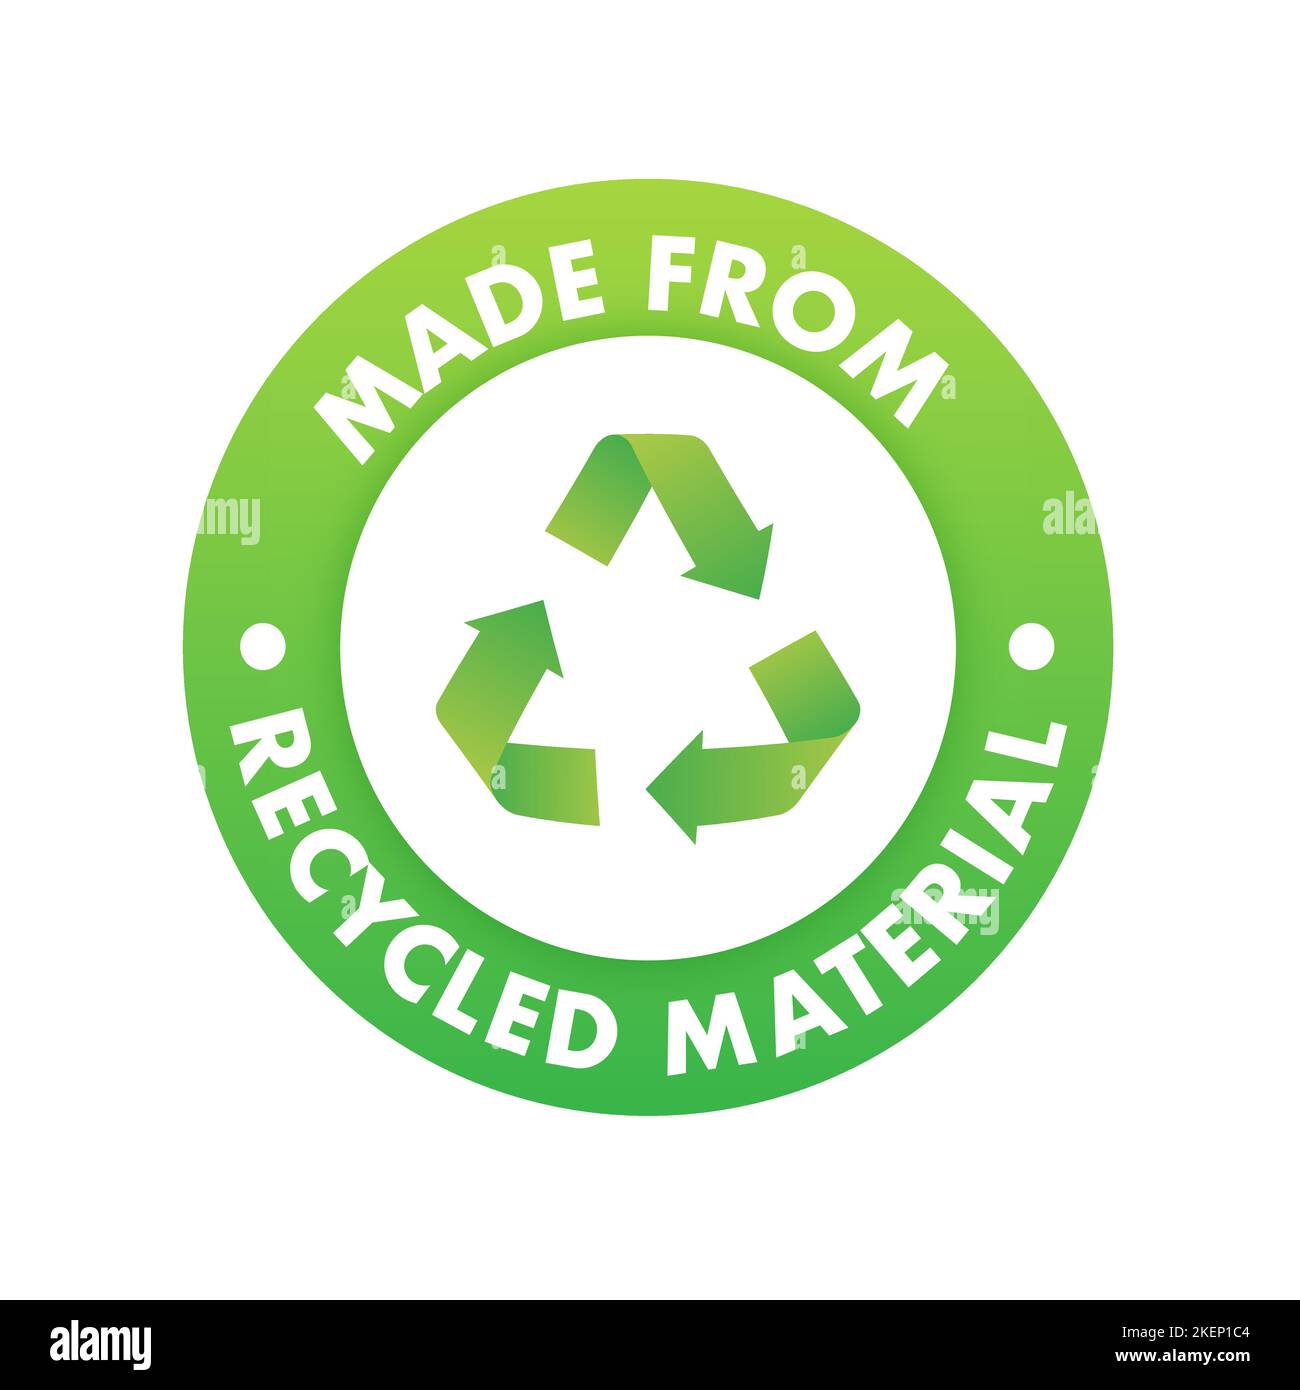 Hergestellt mit Recycling-Materialien Schild, Etikett. Vektorgrafik Stock Vektor